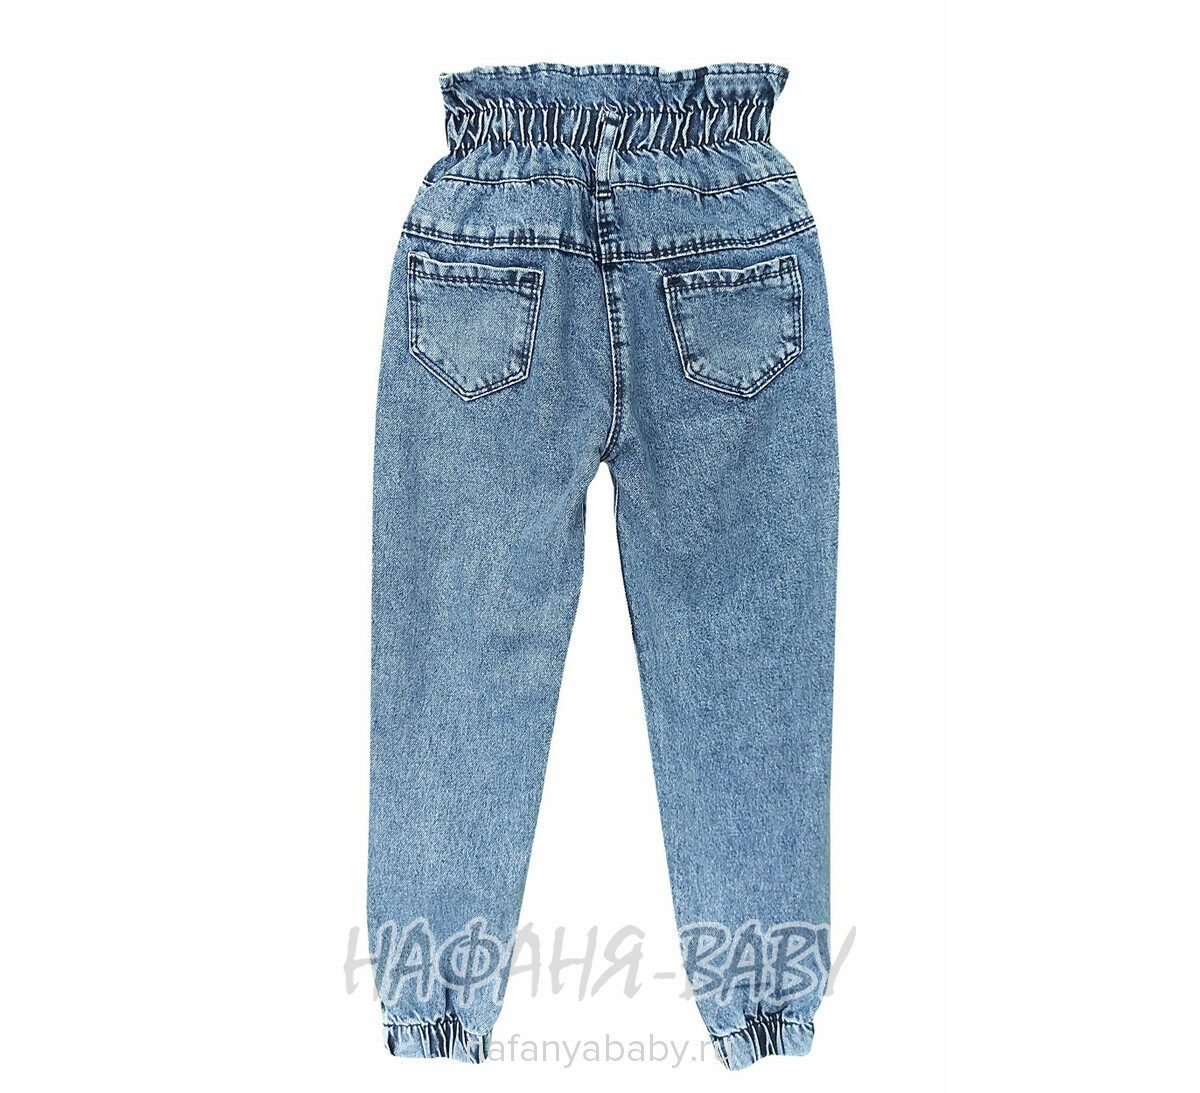 Джинсы YAVRUCAK Jeans арт: 7204 для девочки от 3 до 7 лет, цвет синий, оптом Турция